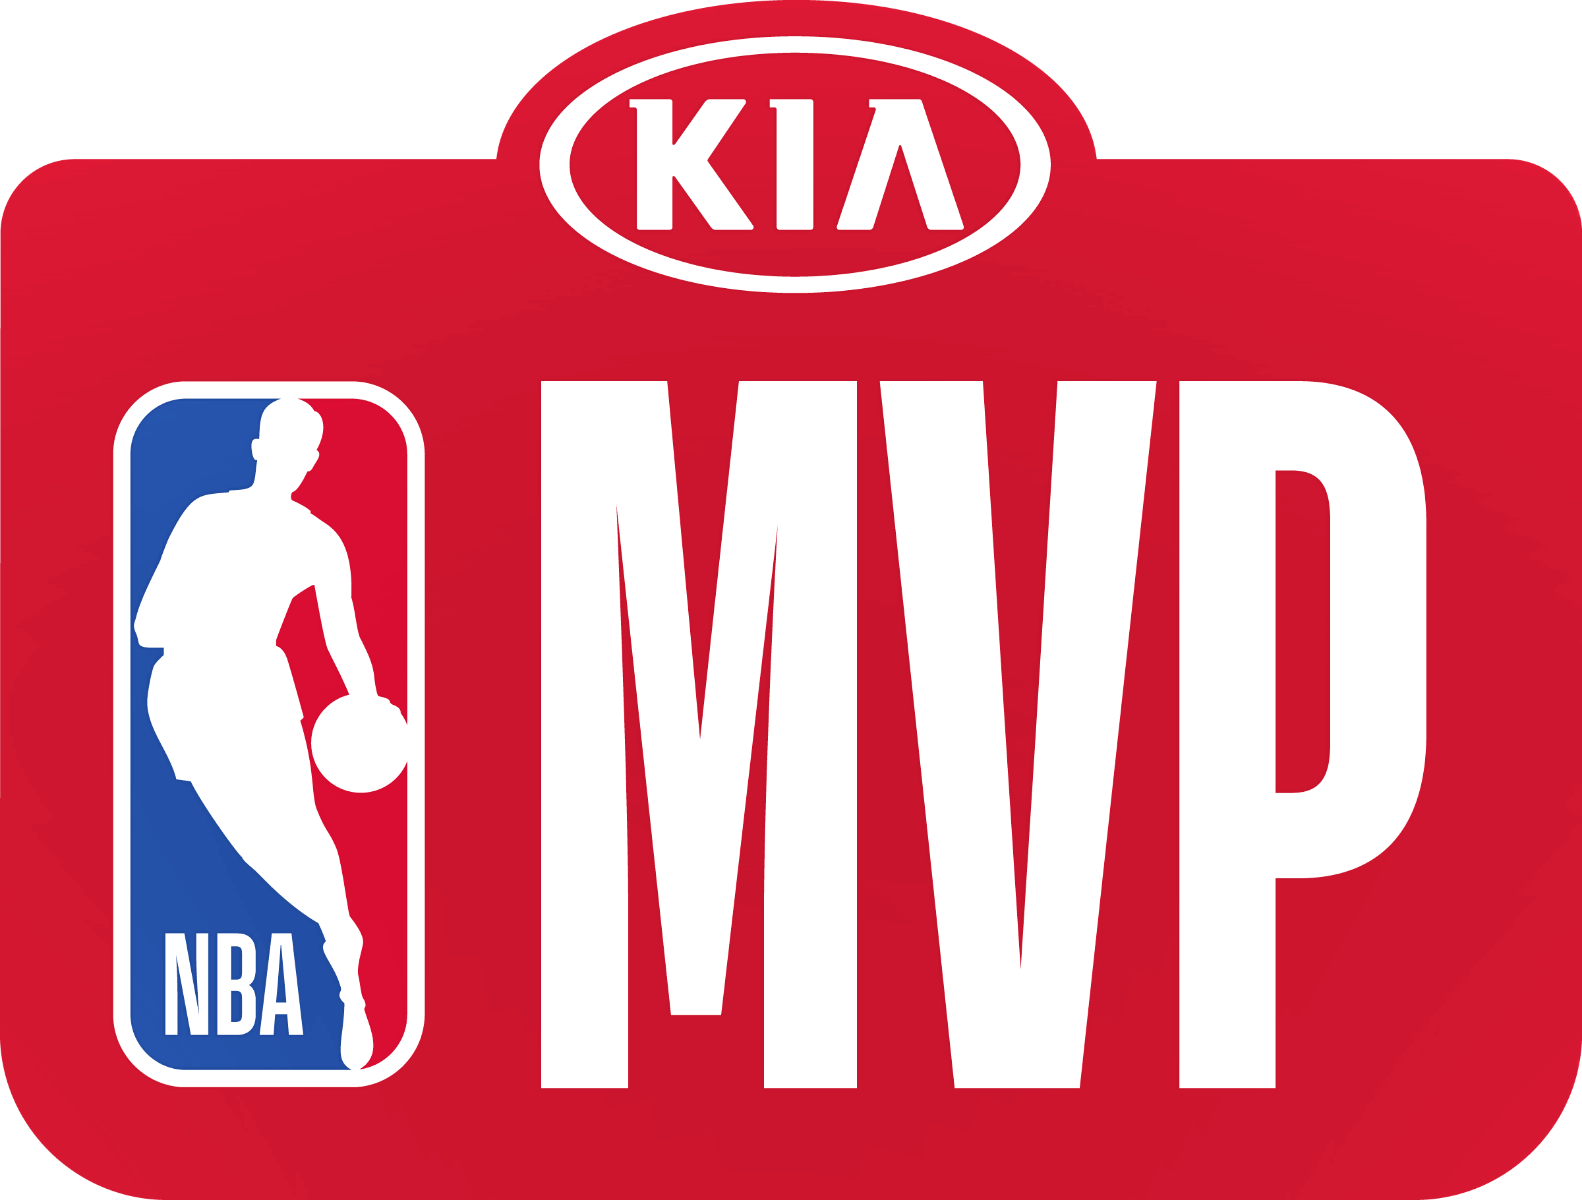 Kia MVP logo